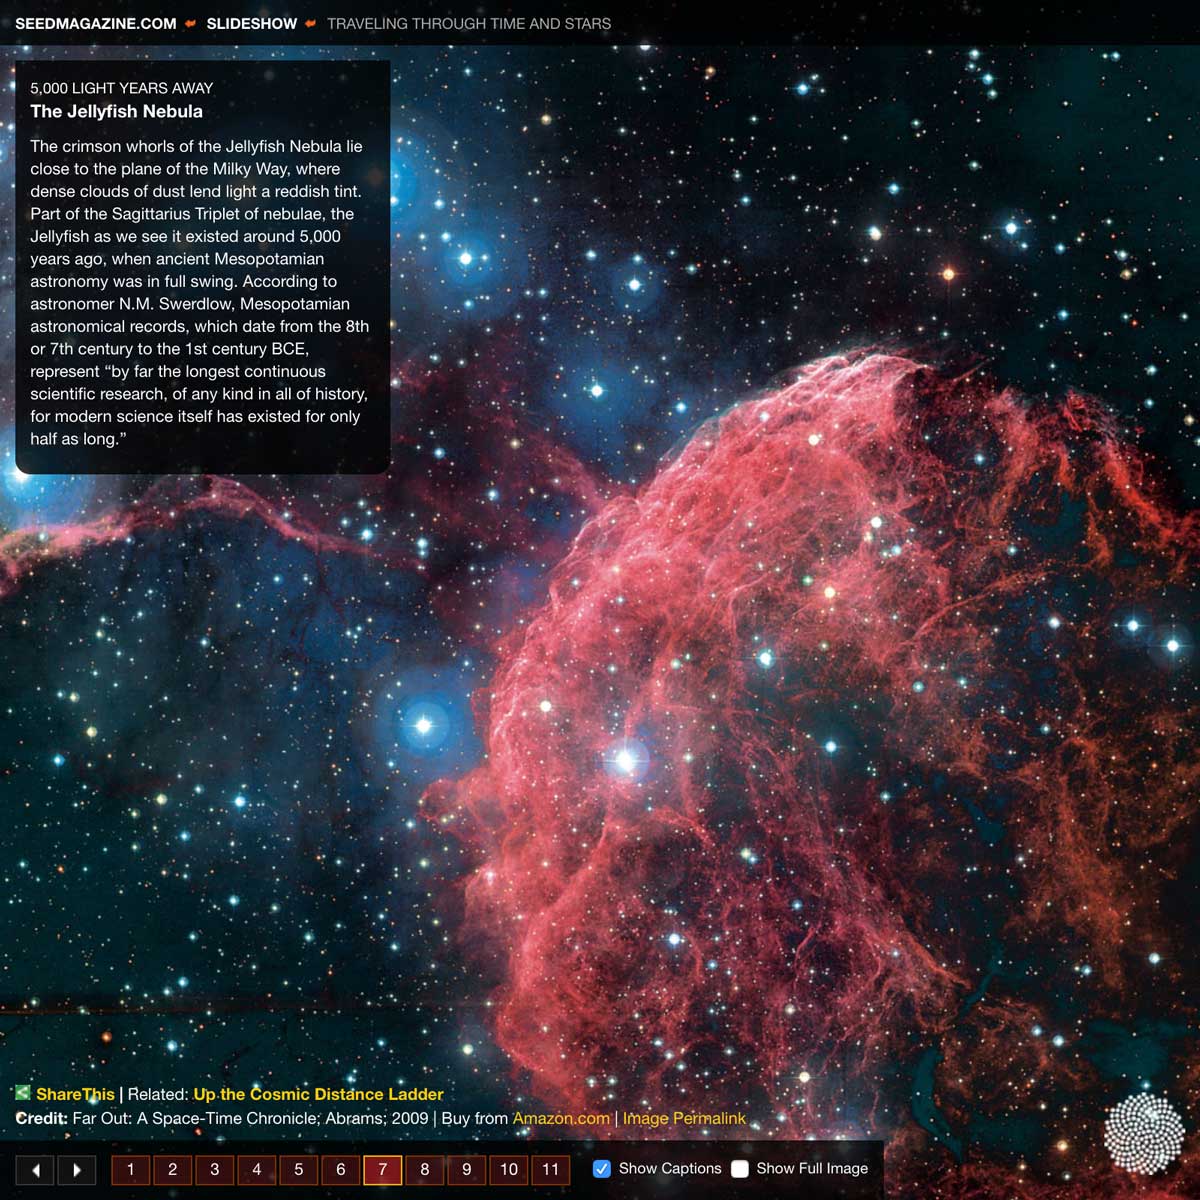 SEED-Slideshow-Nebula